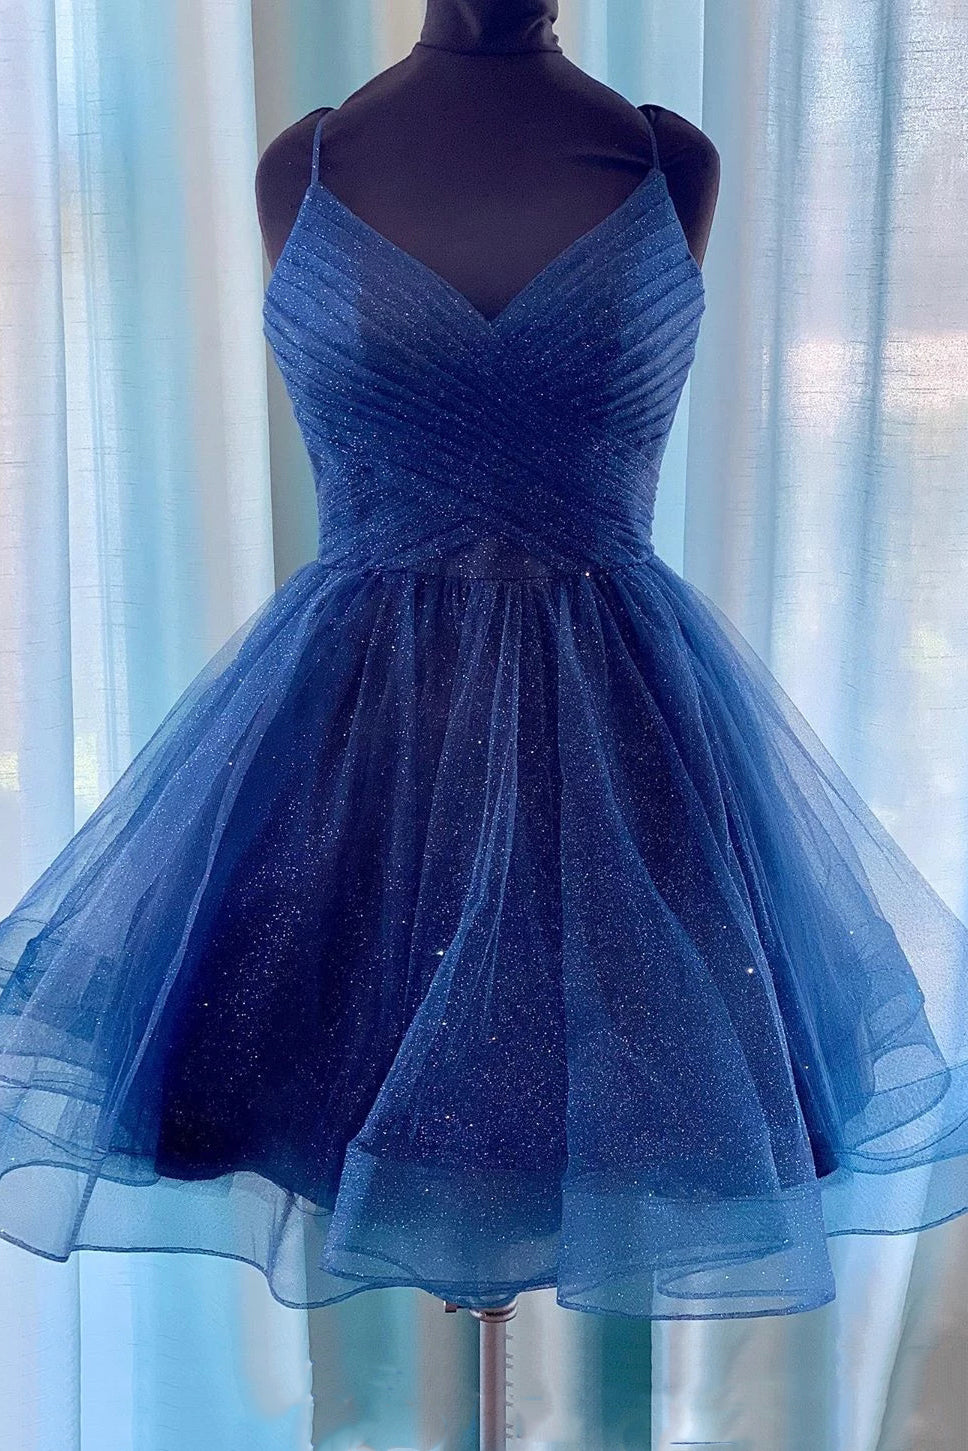 Sparkly Navy Blue Homecoming Dress, V-neck Short Prom Dress OM477